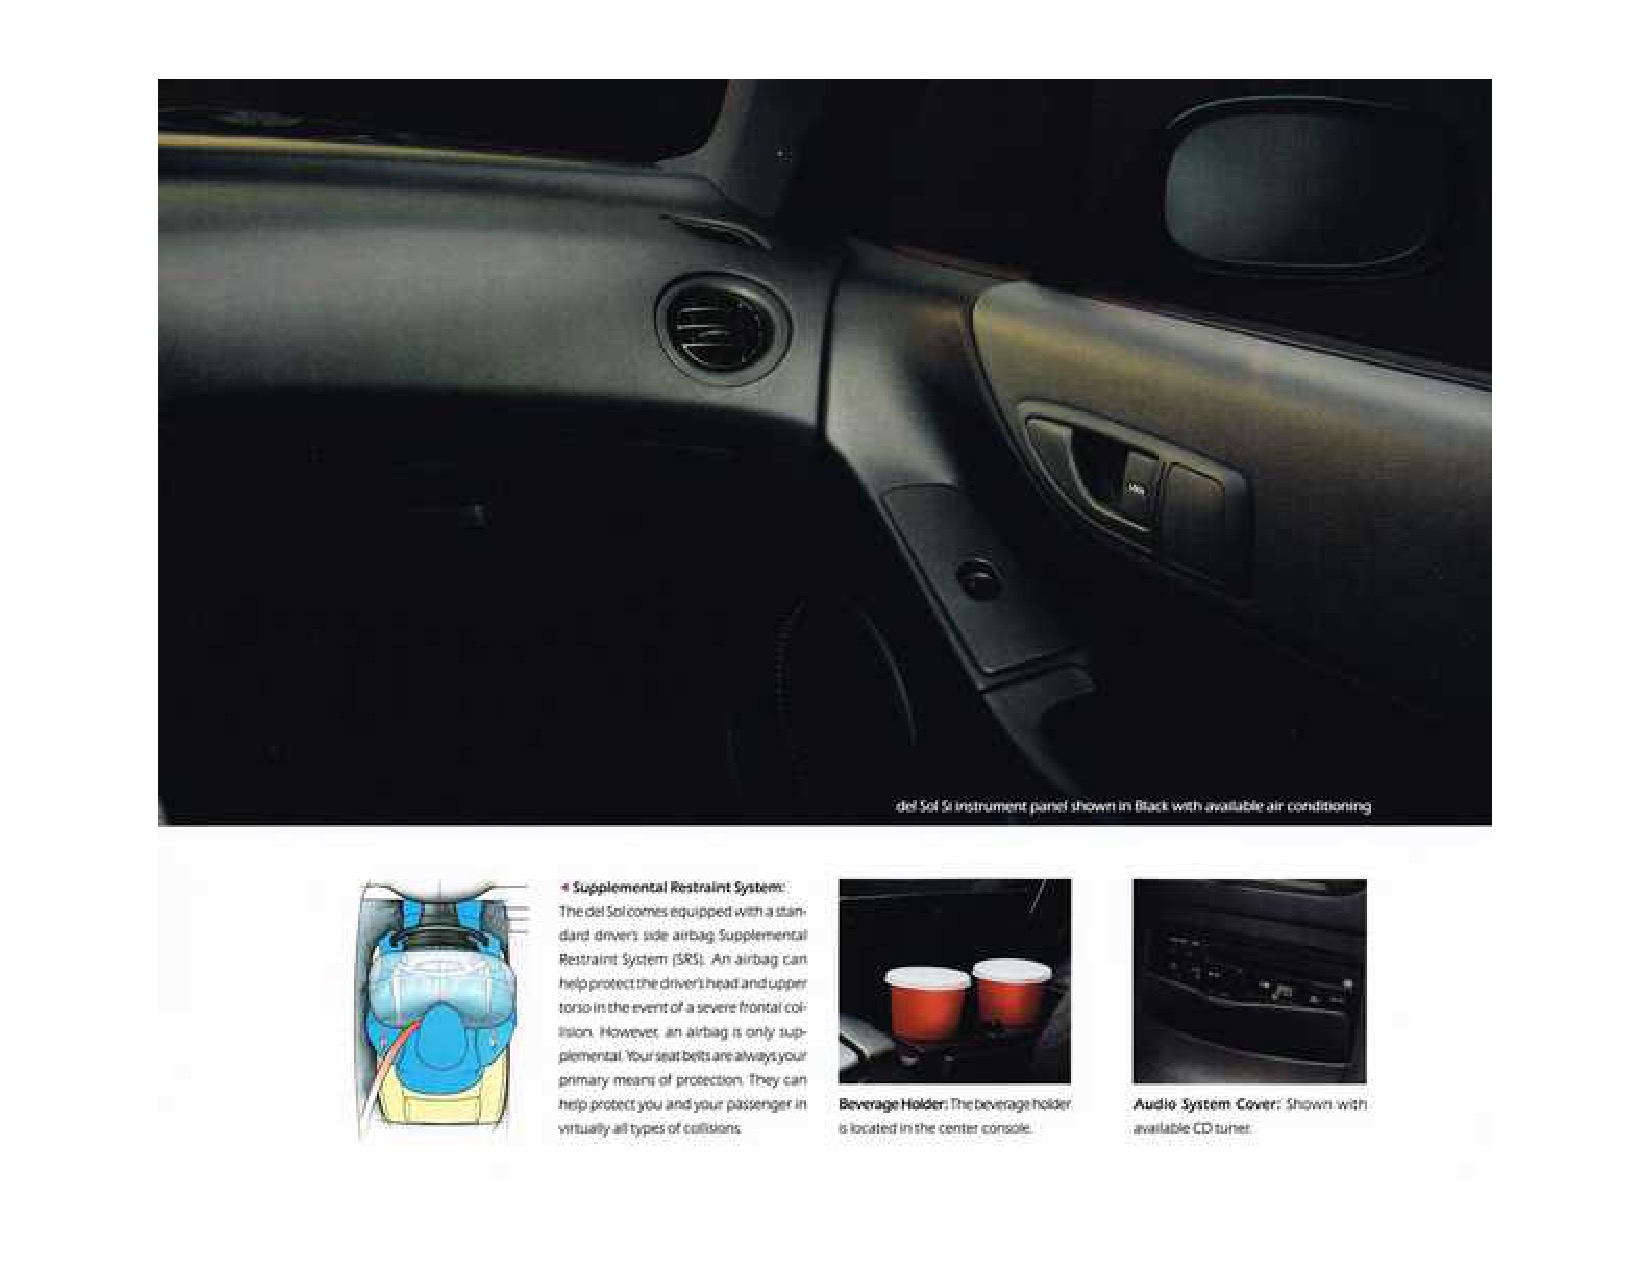 1993 Honda Civic delSol Brochure Page 2